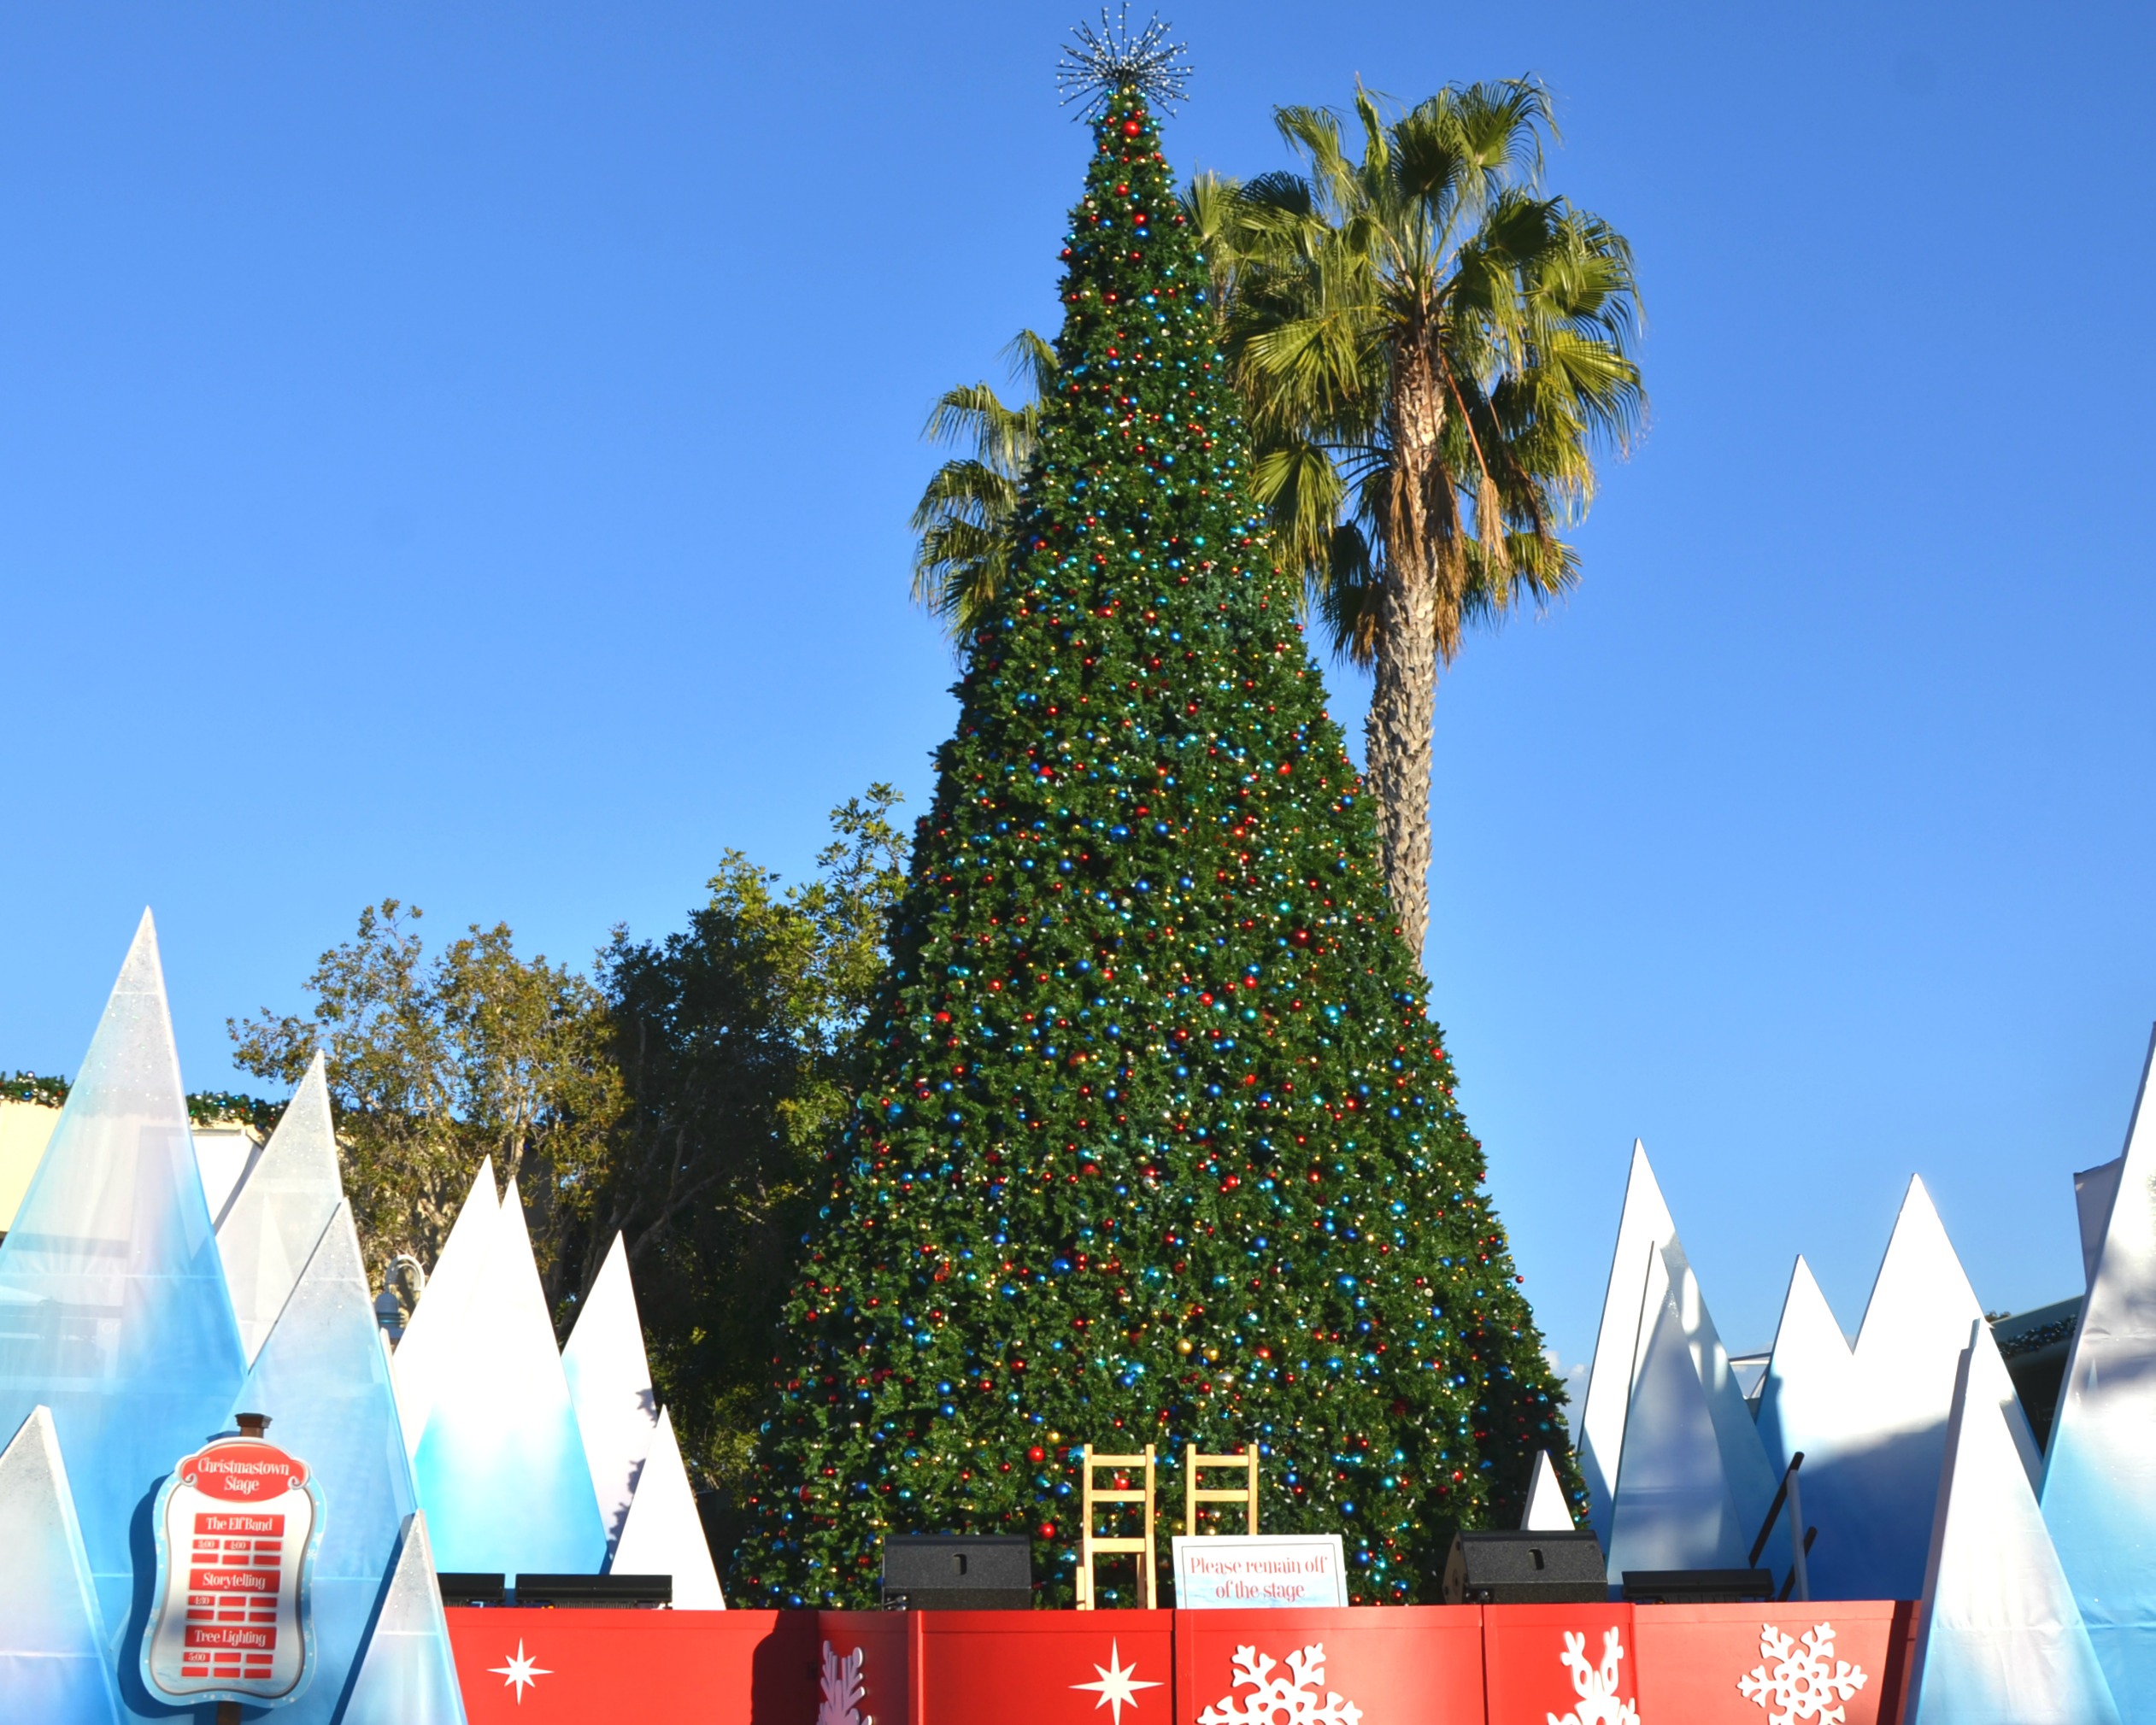 Rudolph's Christmas tree at SeaWorld